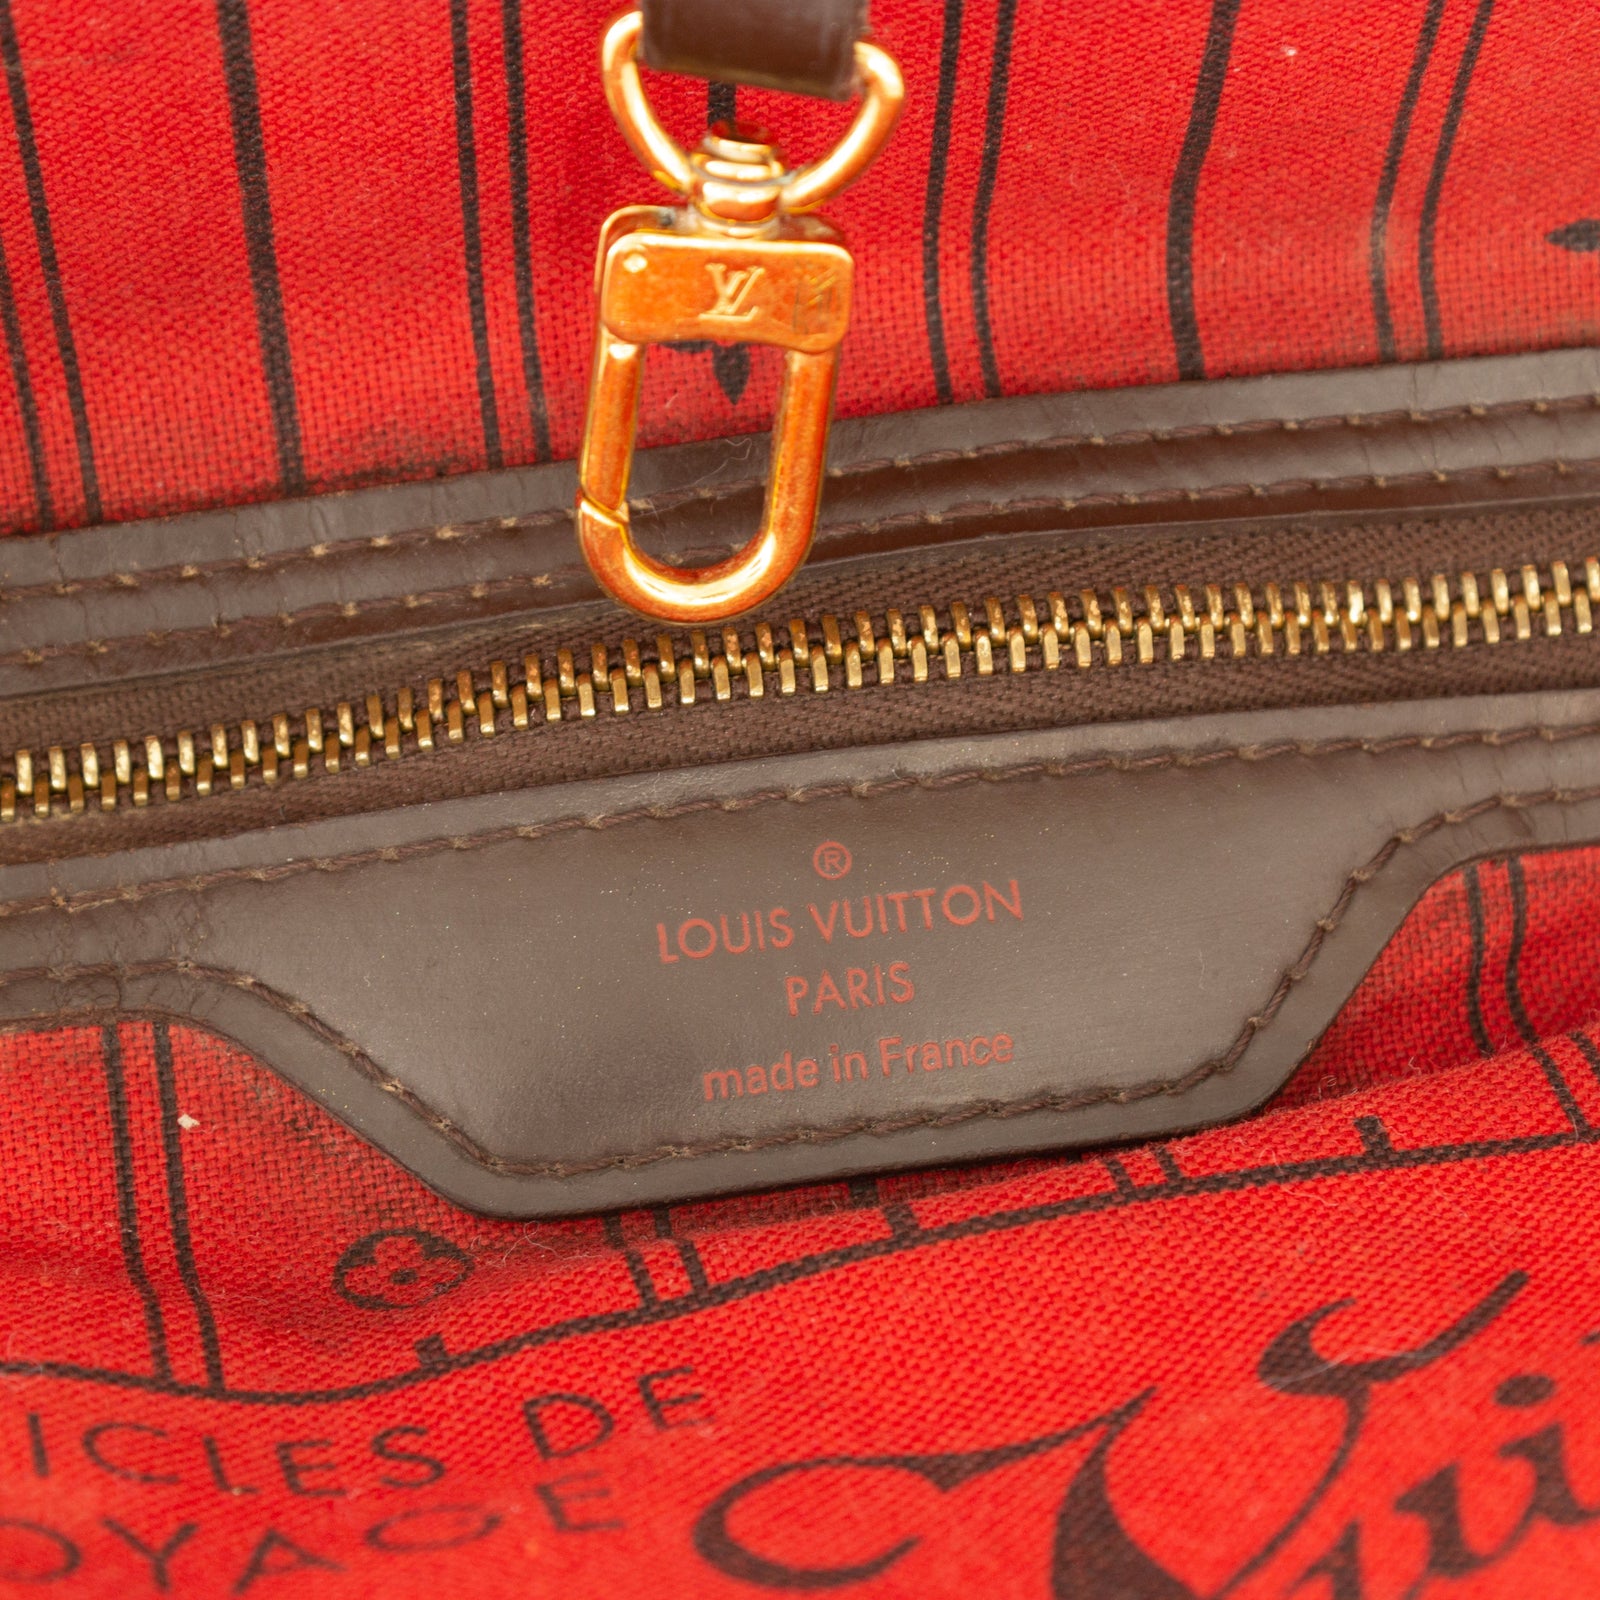 Louis Vuitton Neverfull MM Tote Bag Damier Ebene Red France